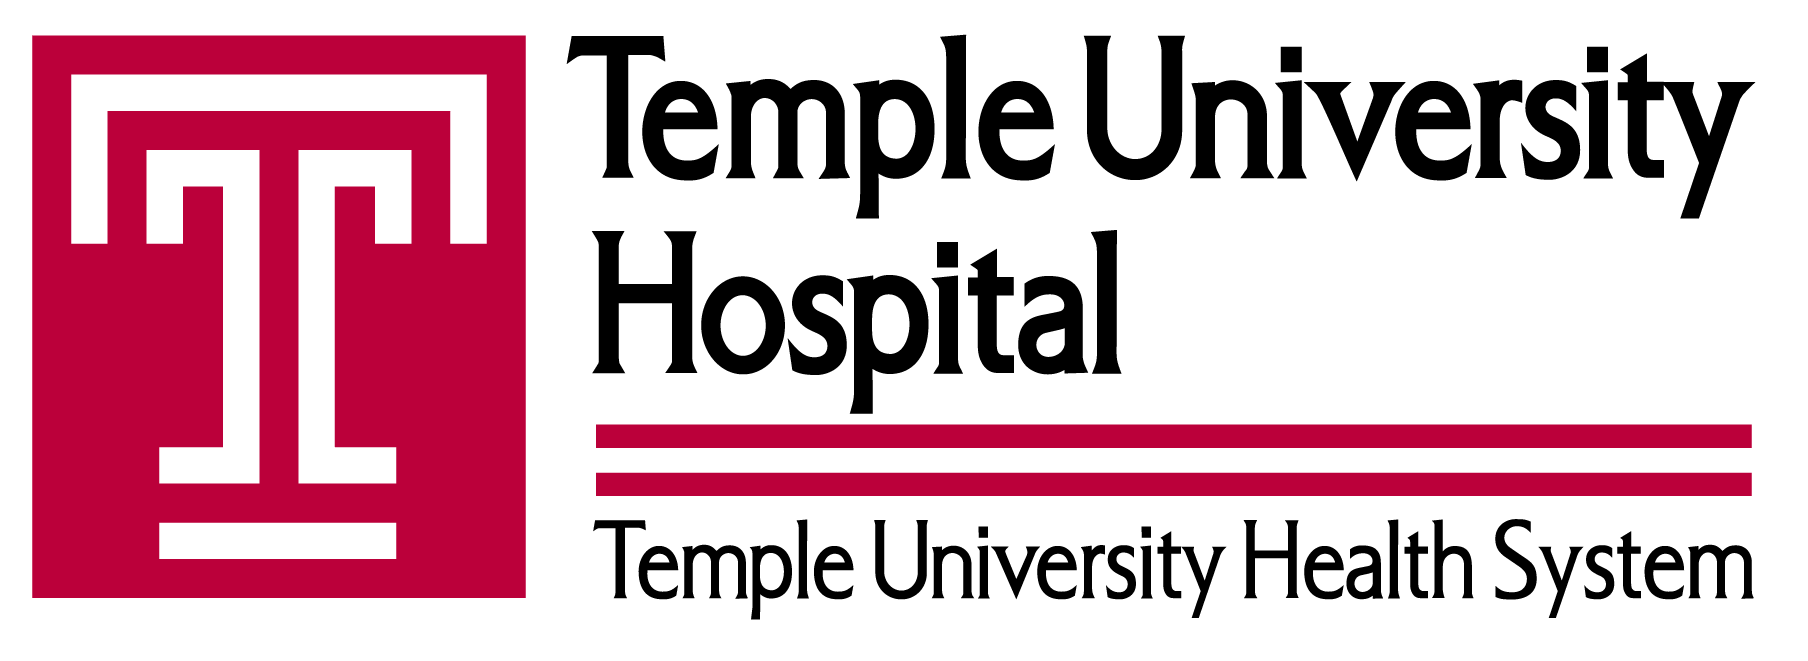 U of U Hospital Logo - Temple University